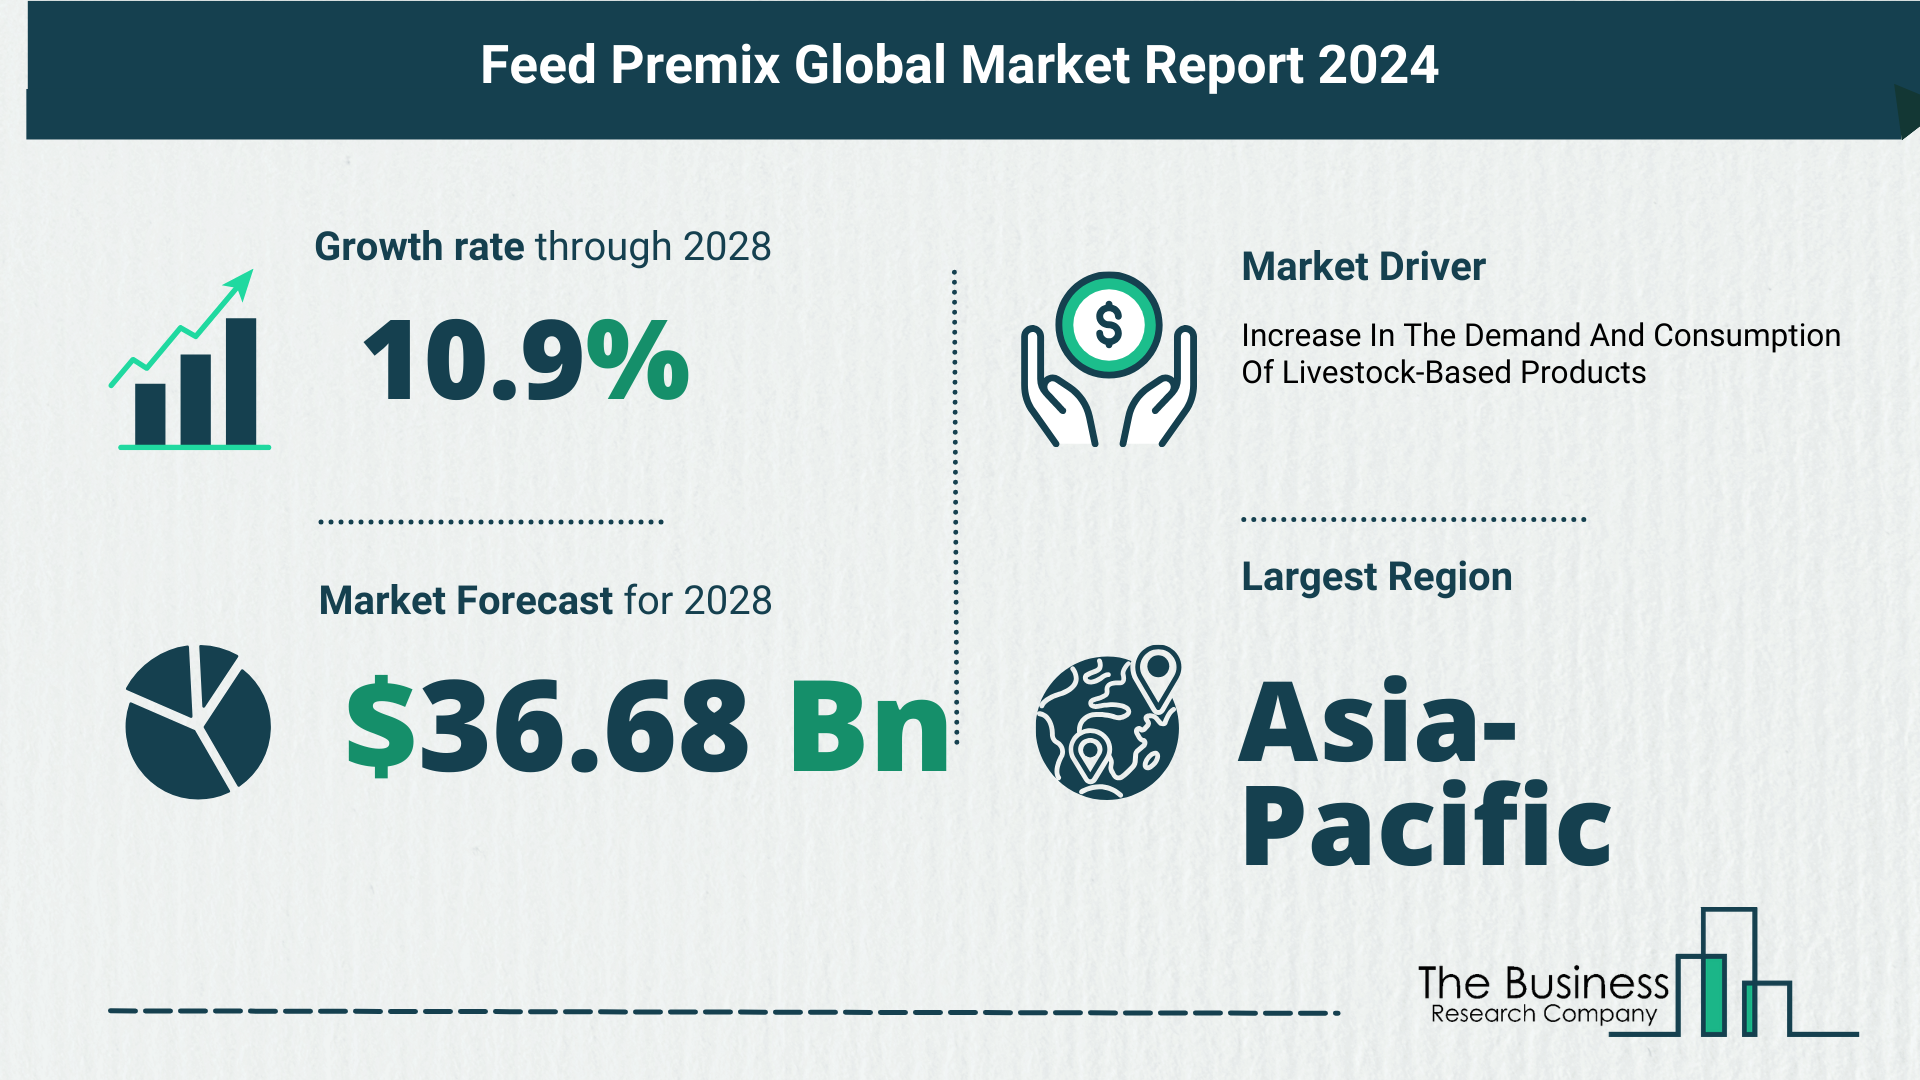 Feed Premix Market Forecast 2024: Forecast Market Size, Drivers And Key Segments